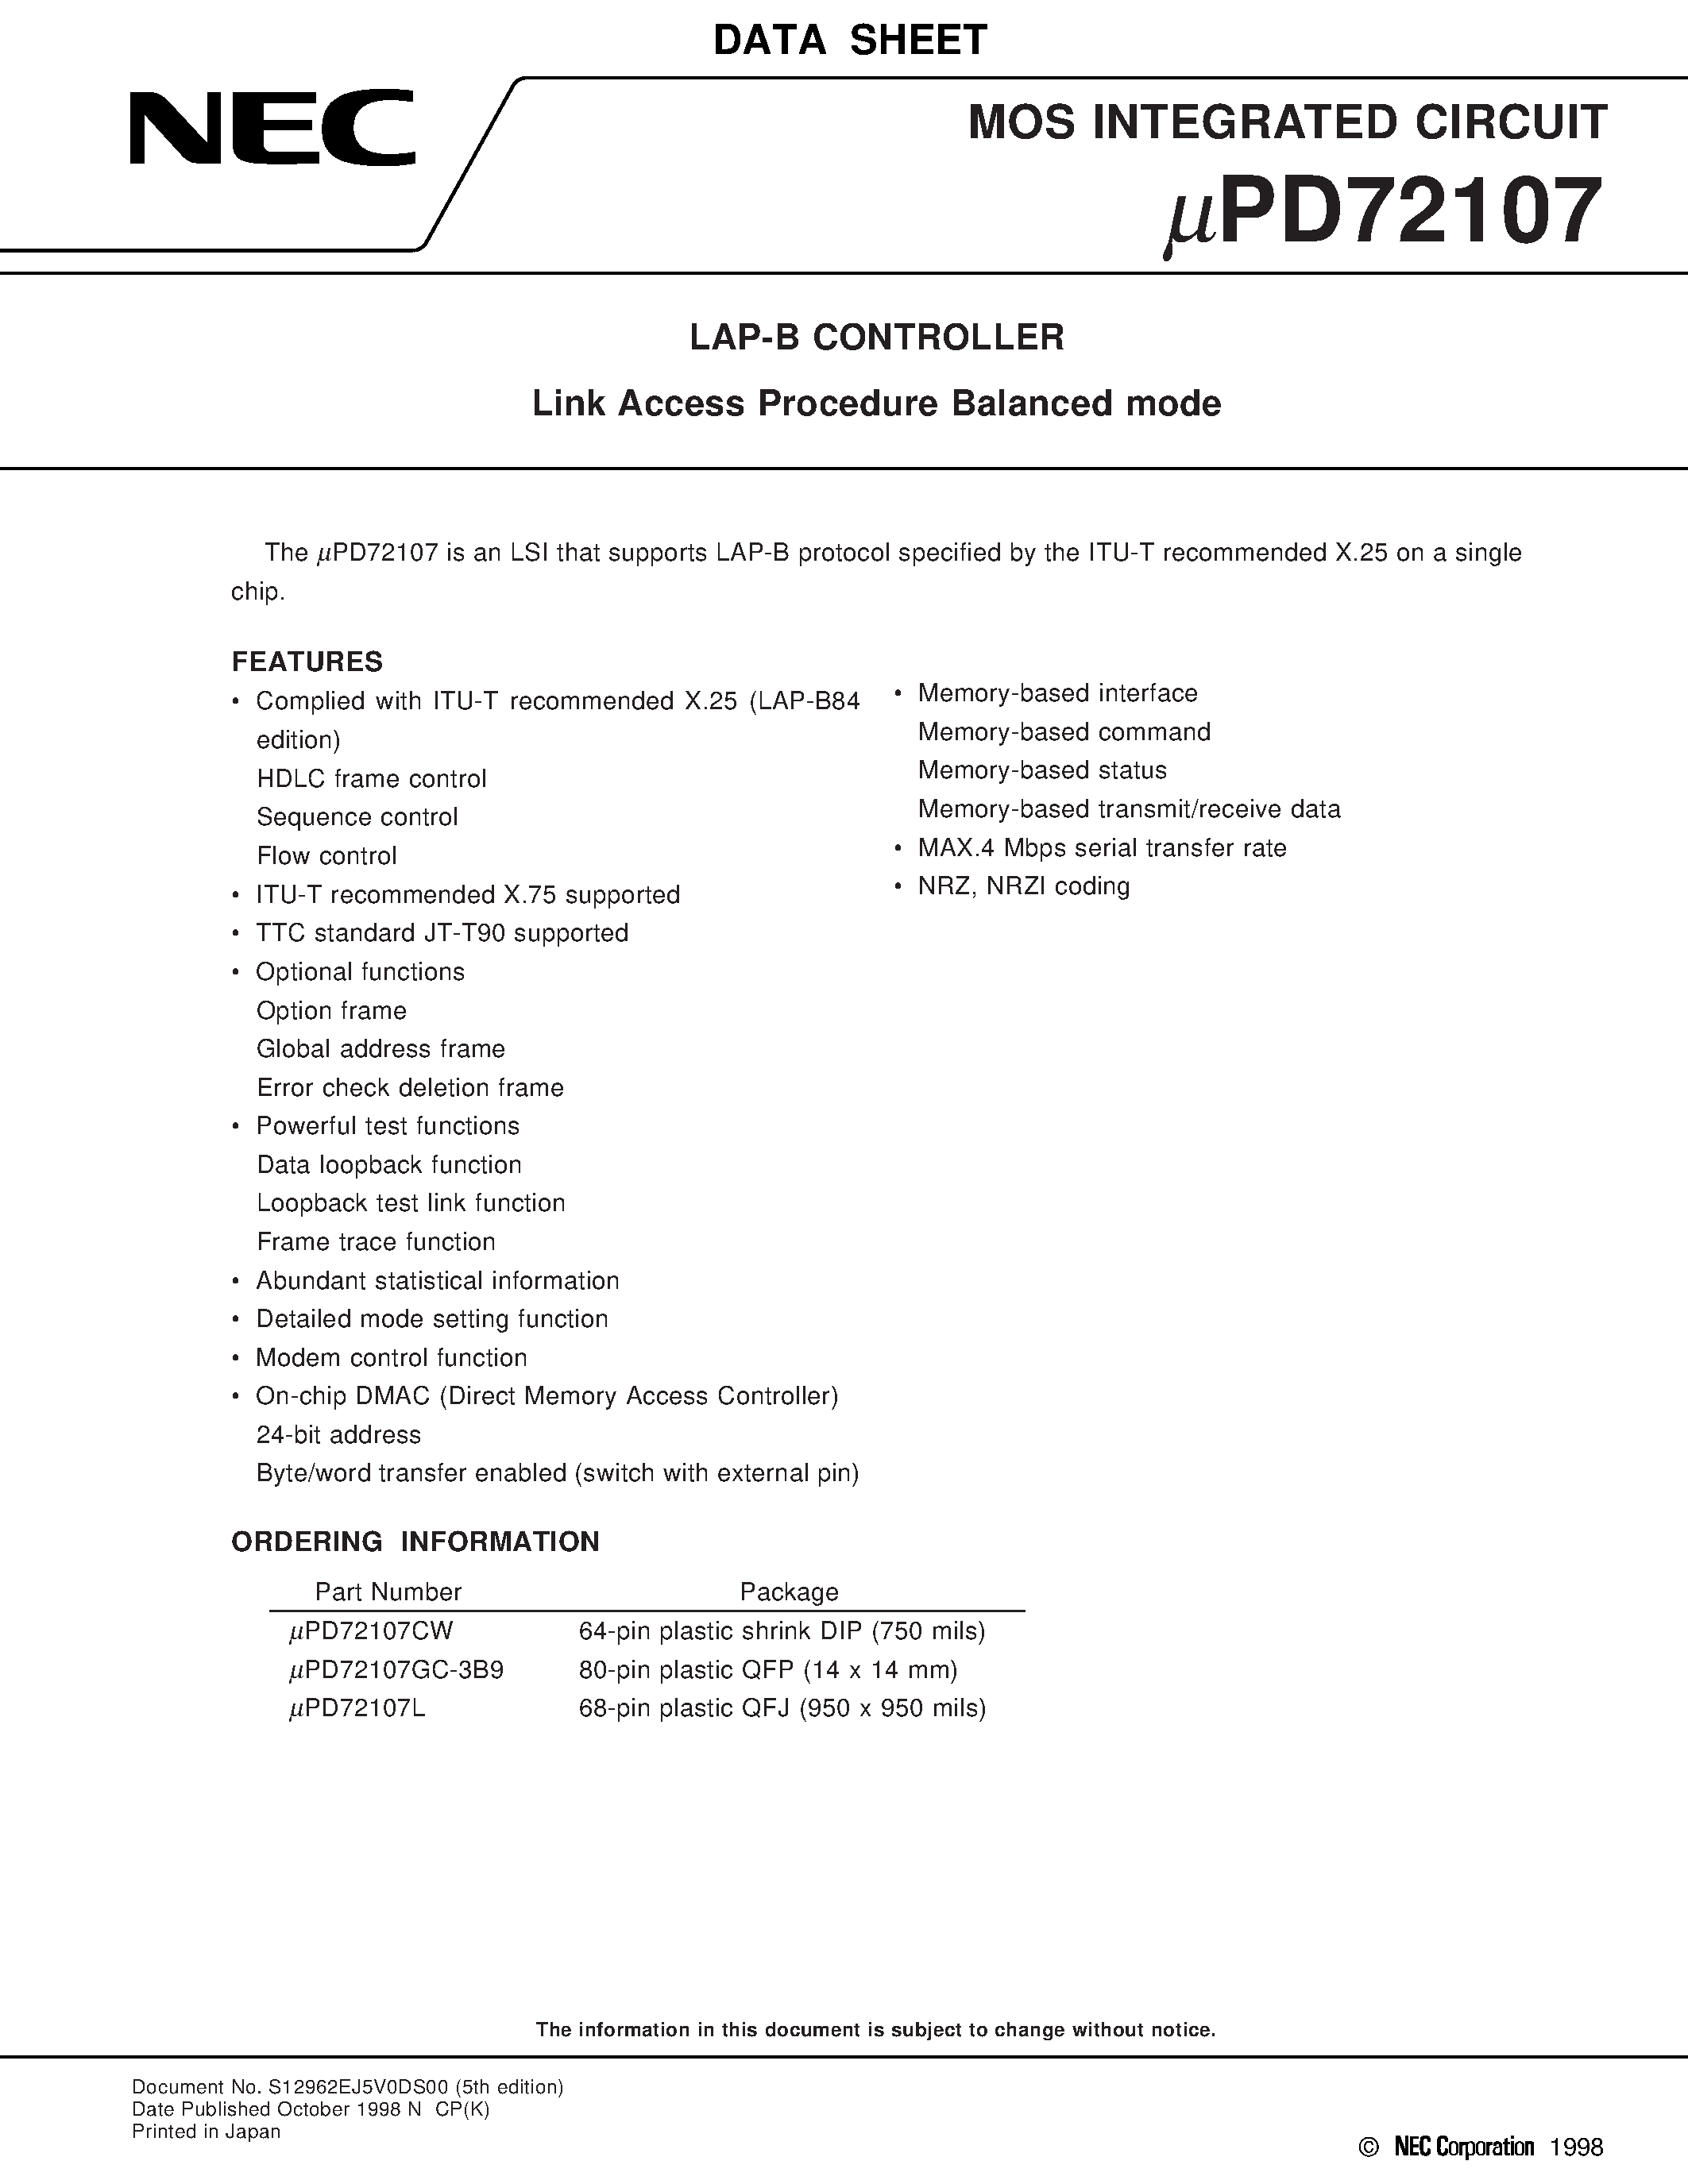 Datasheet uPD72107CW - LAP-B CONTROLLER(Link Access Procedure Balanced mode) page 1